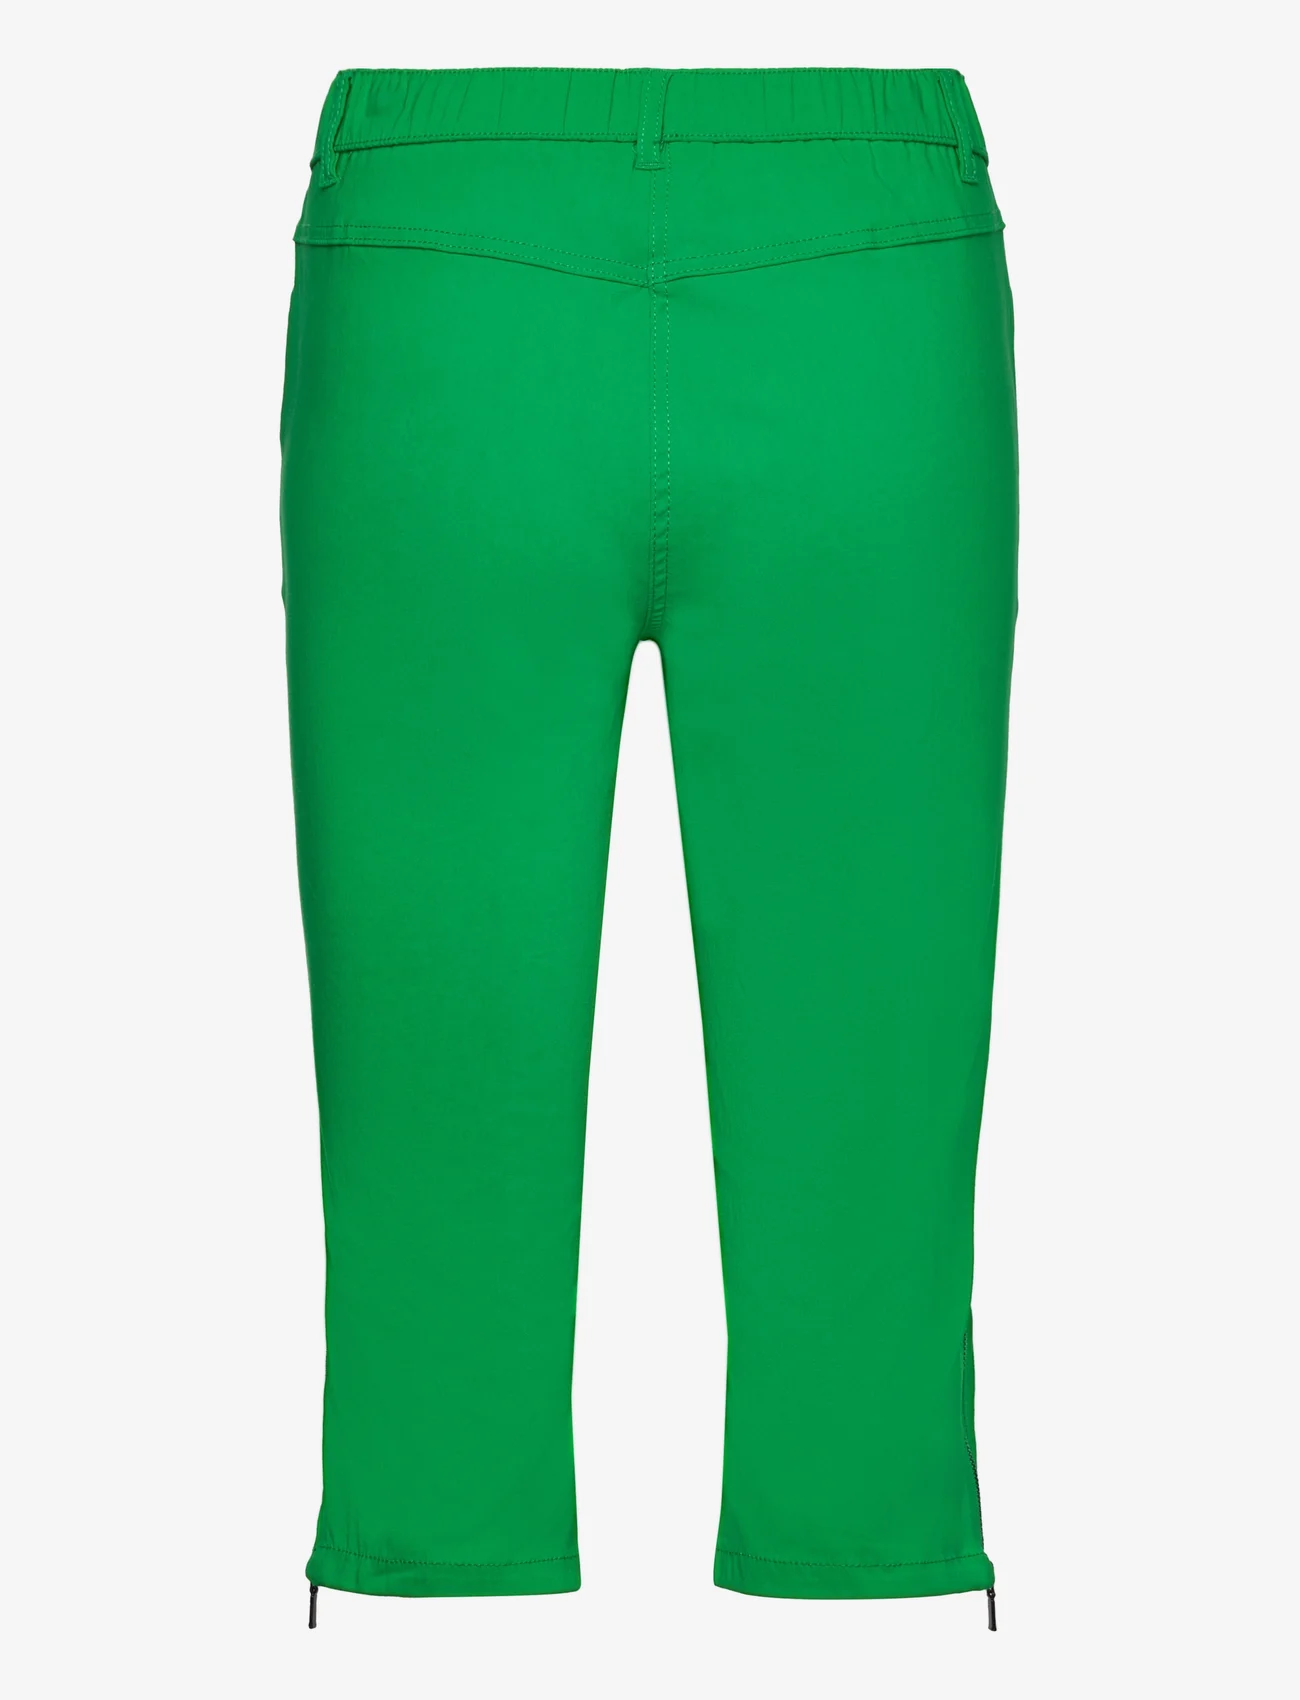 Brandtex - Capri pants - spodnie capri - bright green - 1